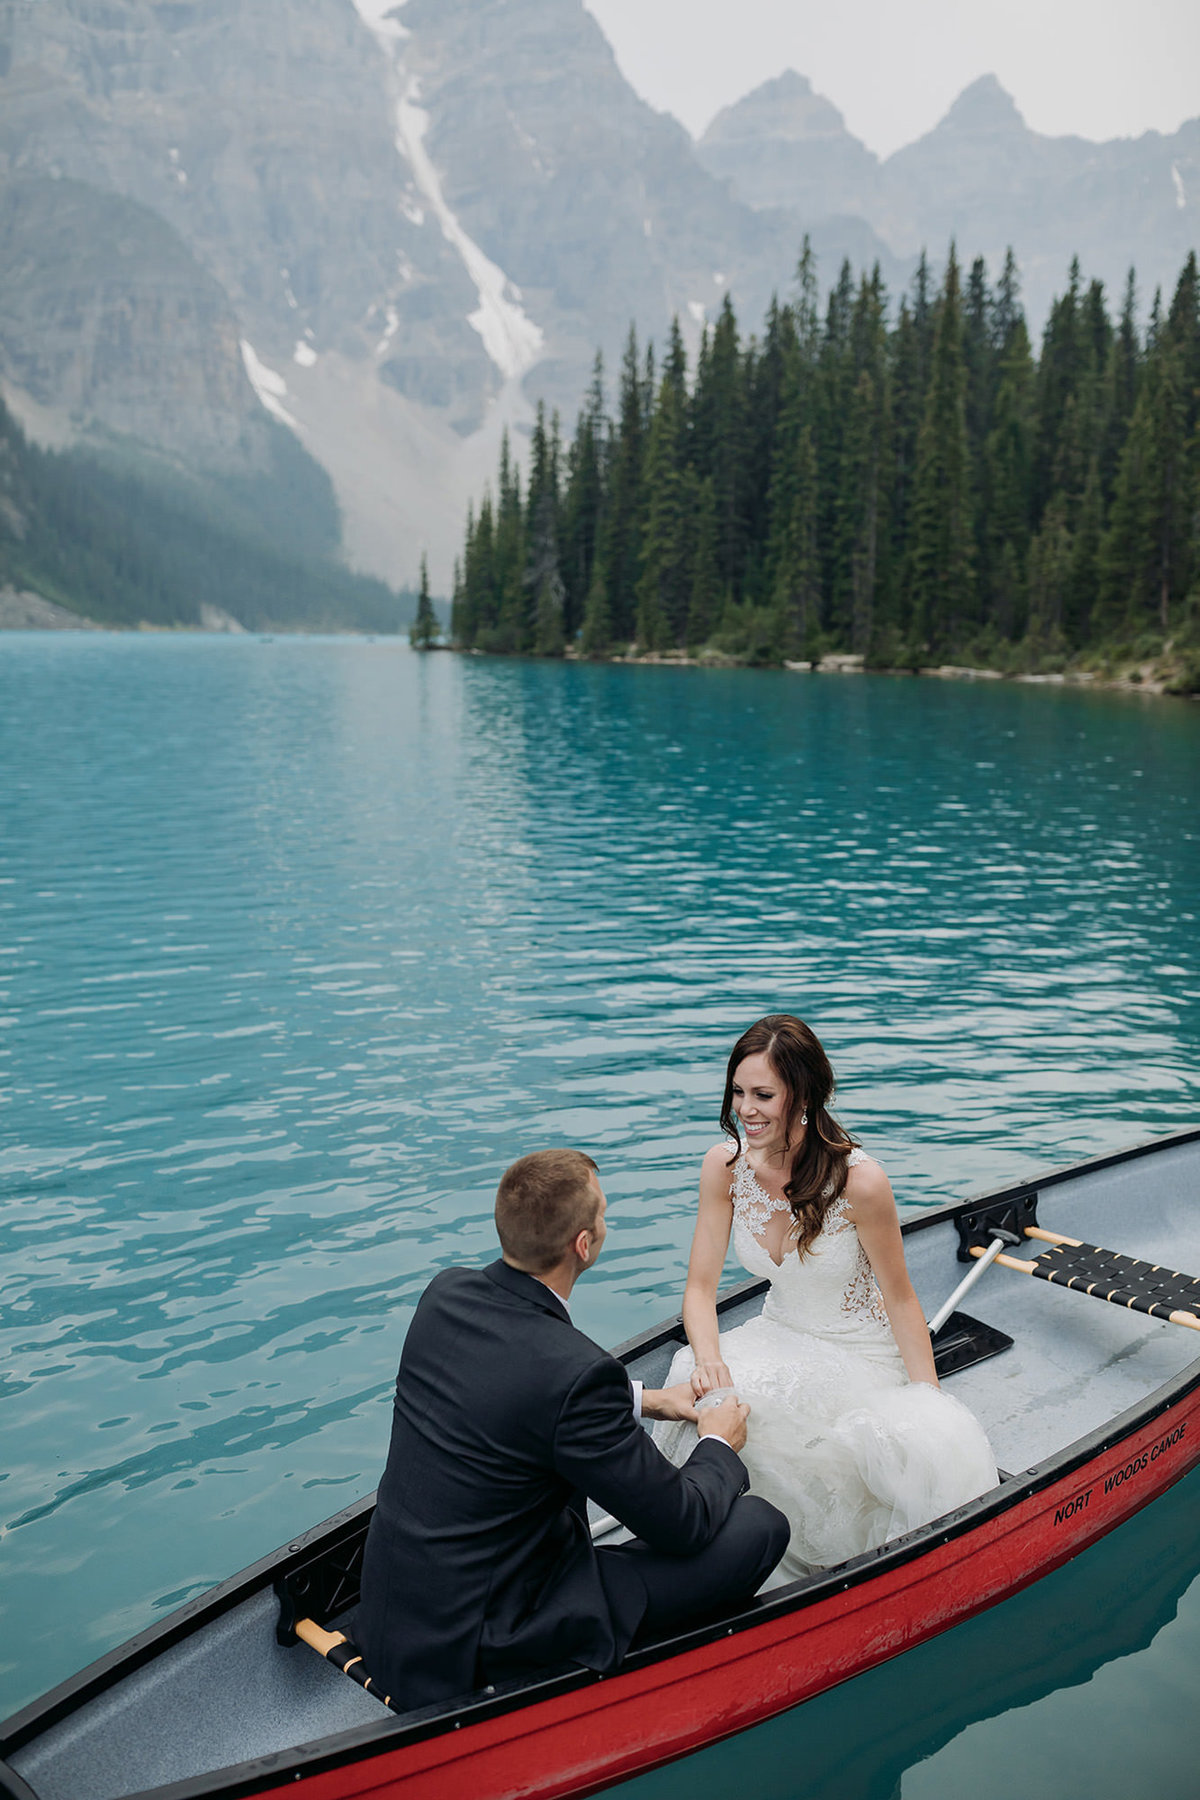 moraine lake lodge red canoe bride groom wedding portraits